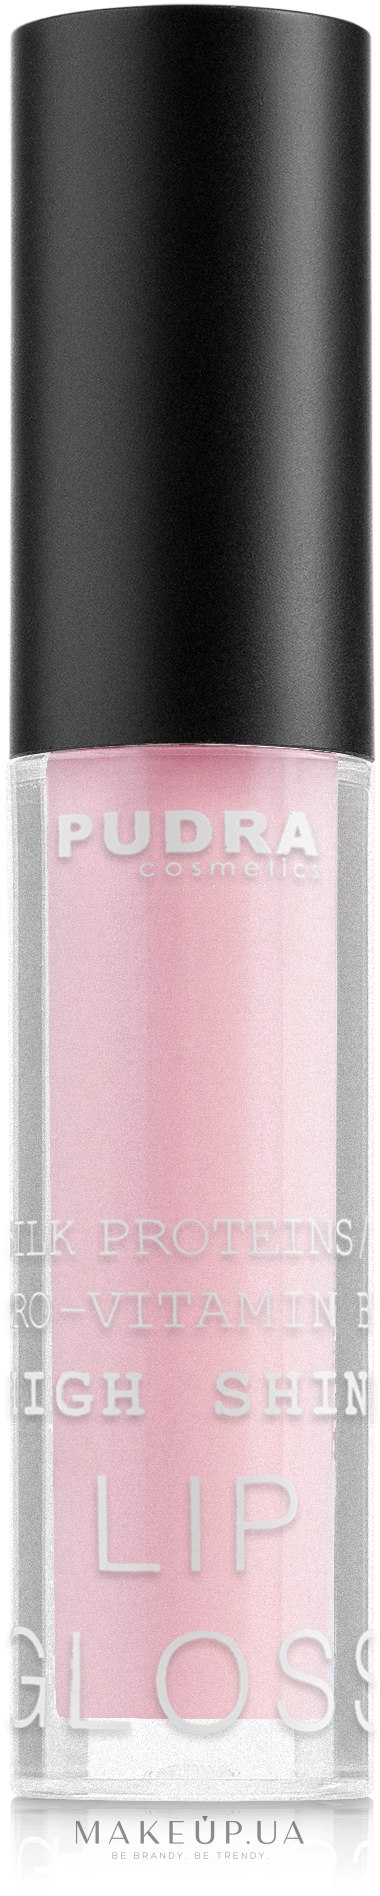 Pudra Cosmetics Lip Gloss